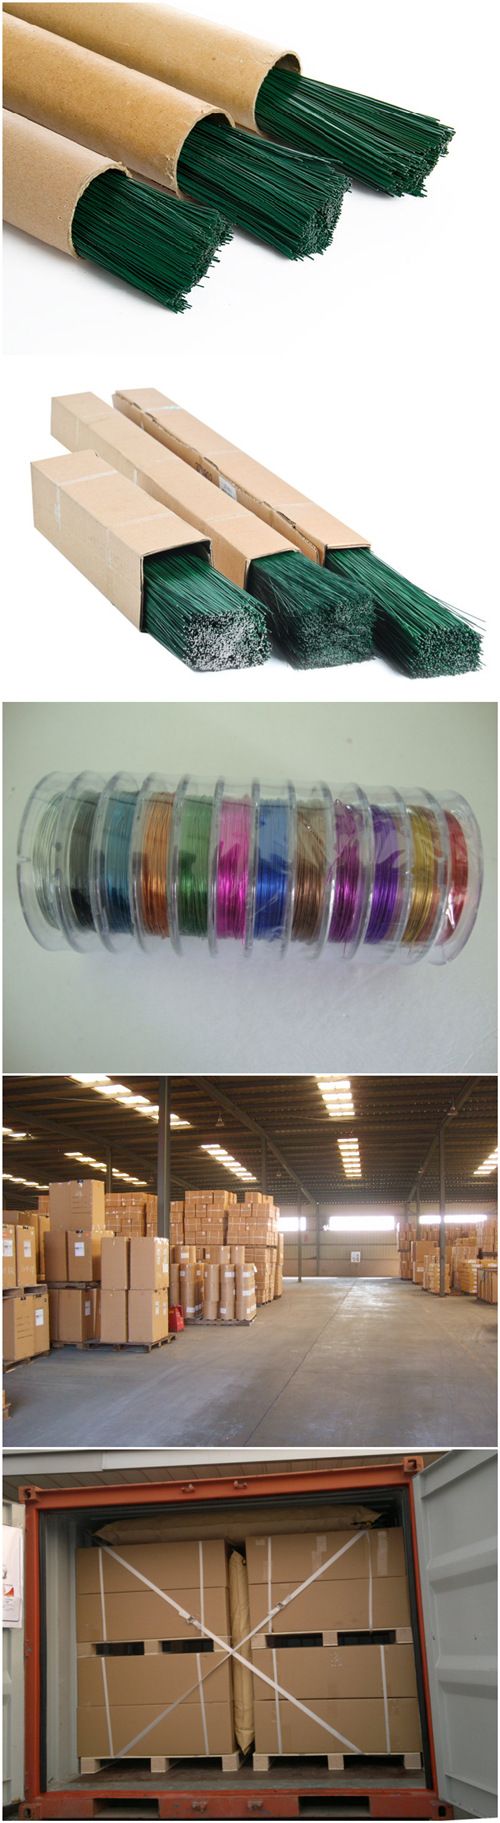 China Supply Aluminium Colorful Craft Wire